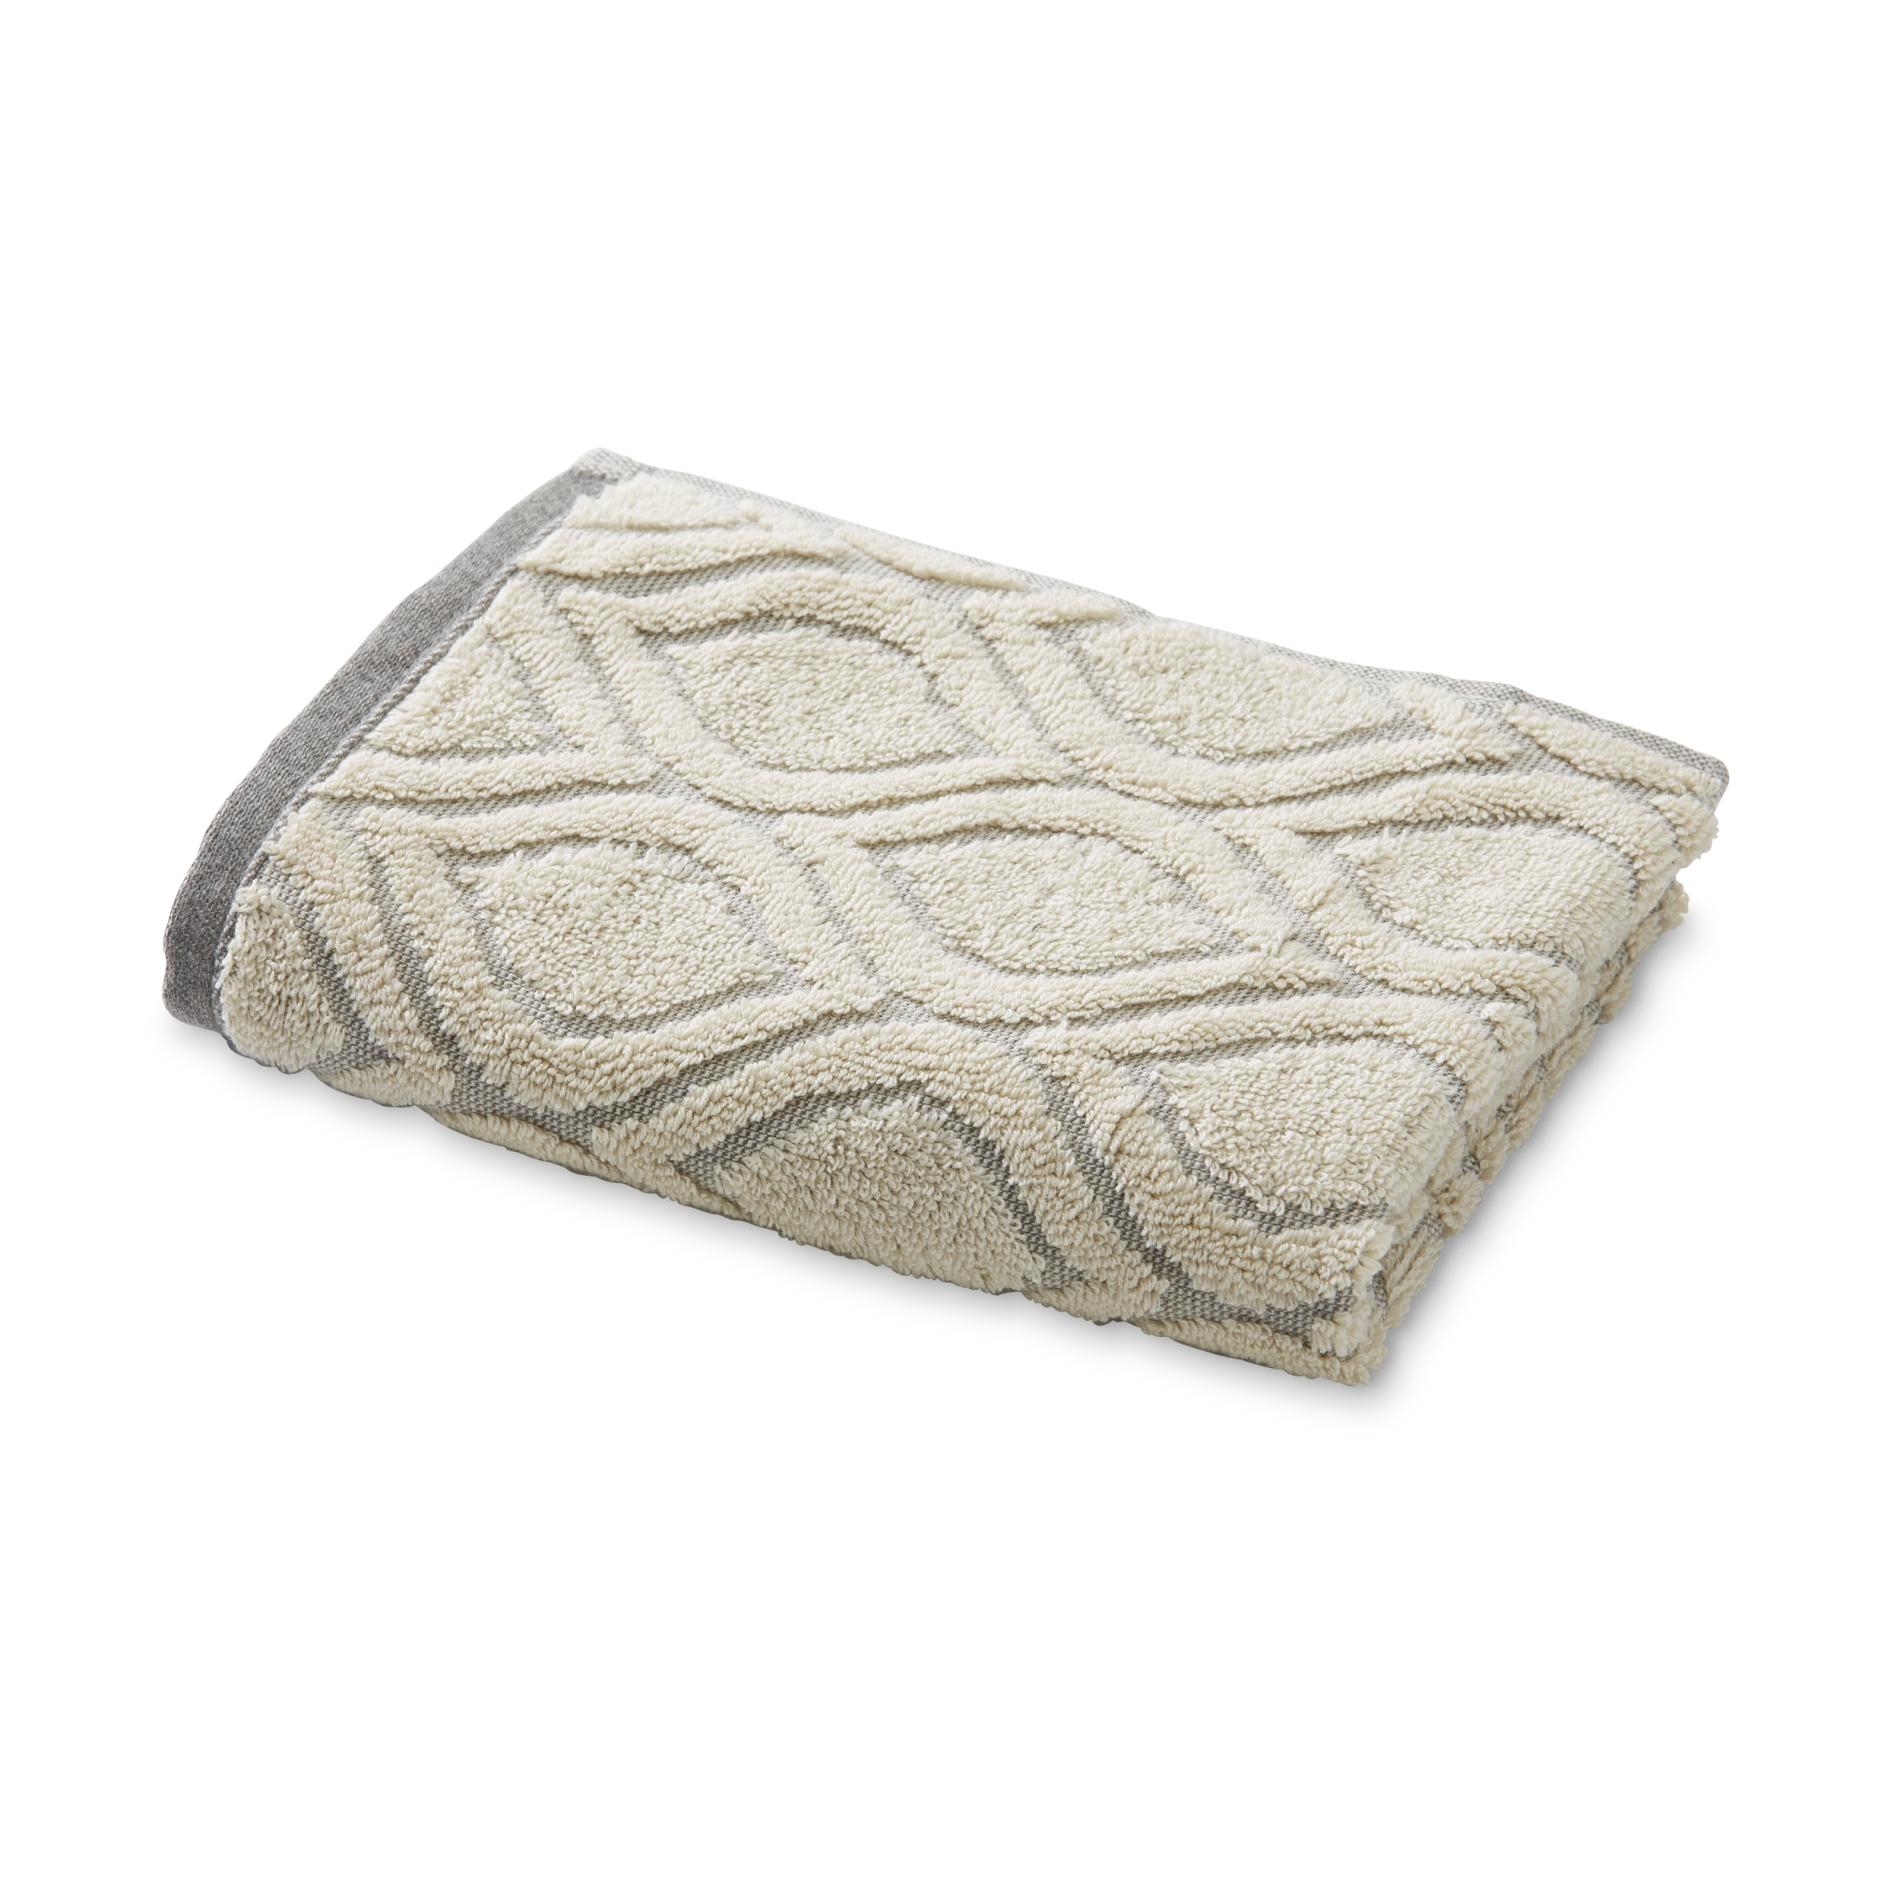 Decorative Towel - Trellis